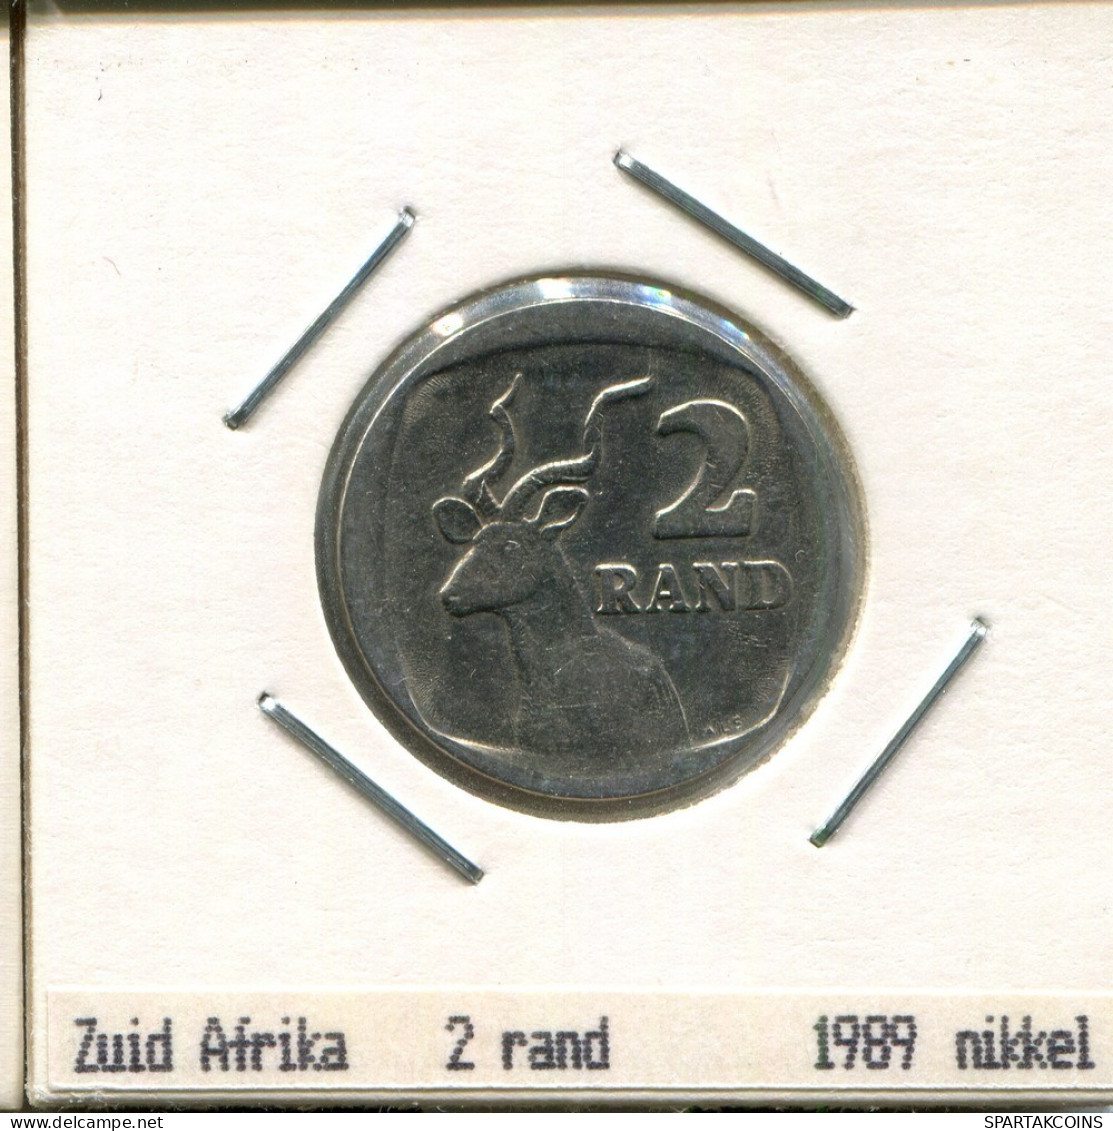 2 RAND 1989 SOUTH AFRICA Coin #AS289.U.A - Afrique Du Sud